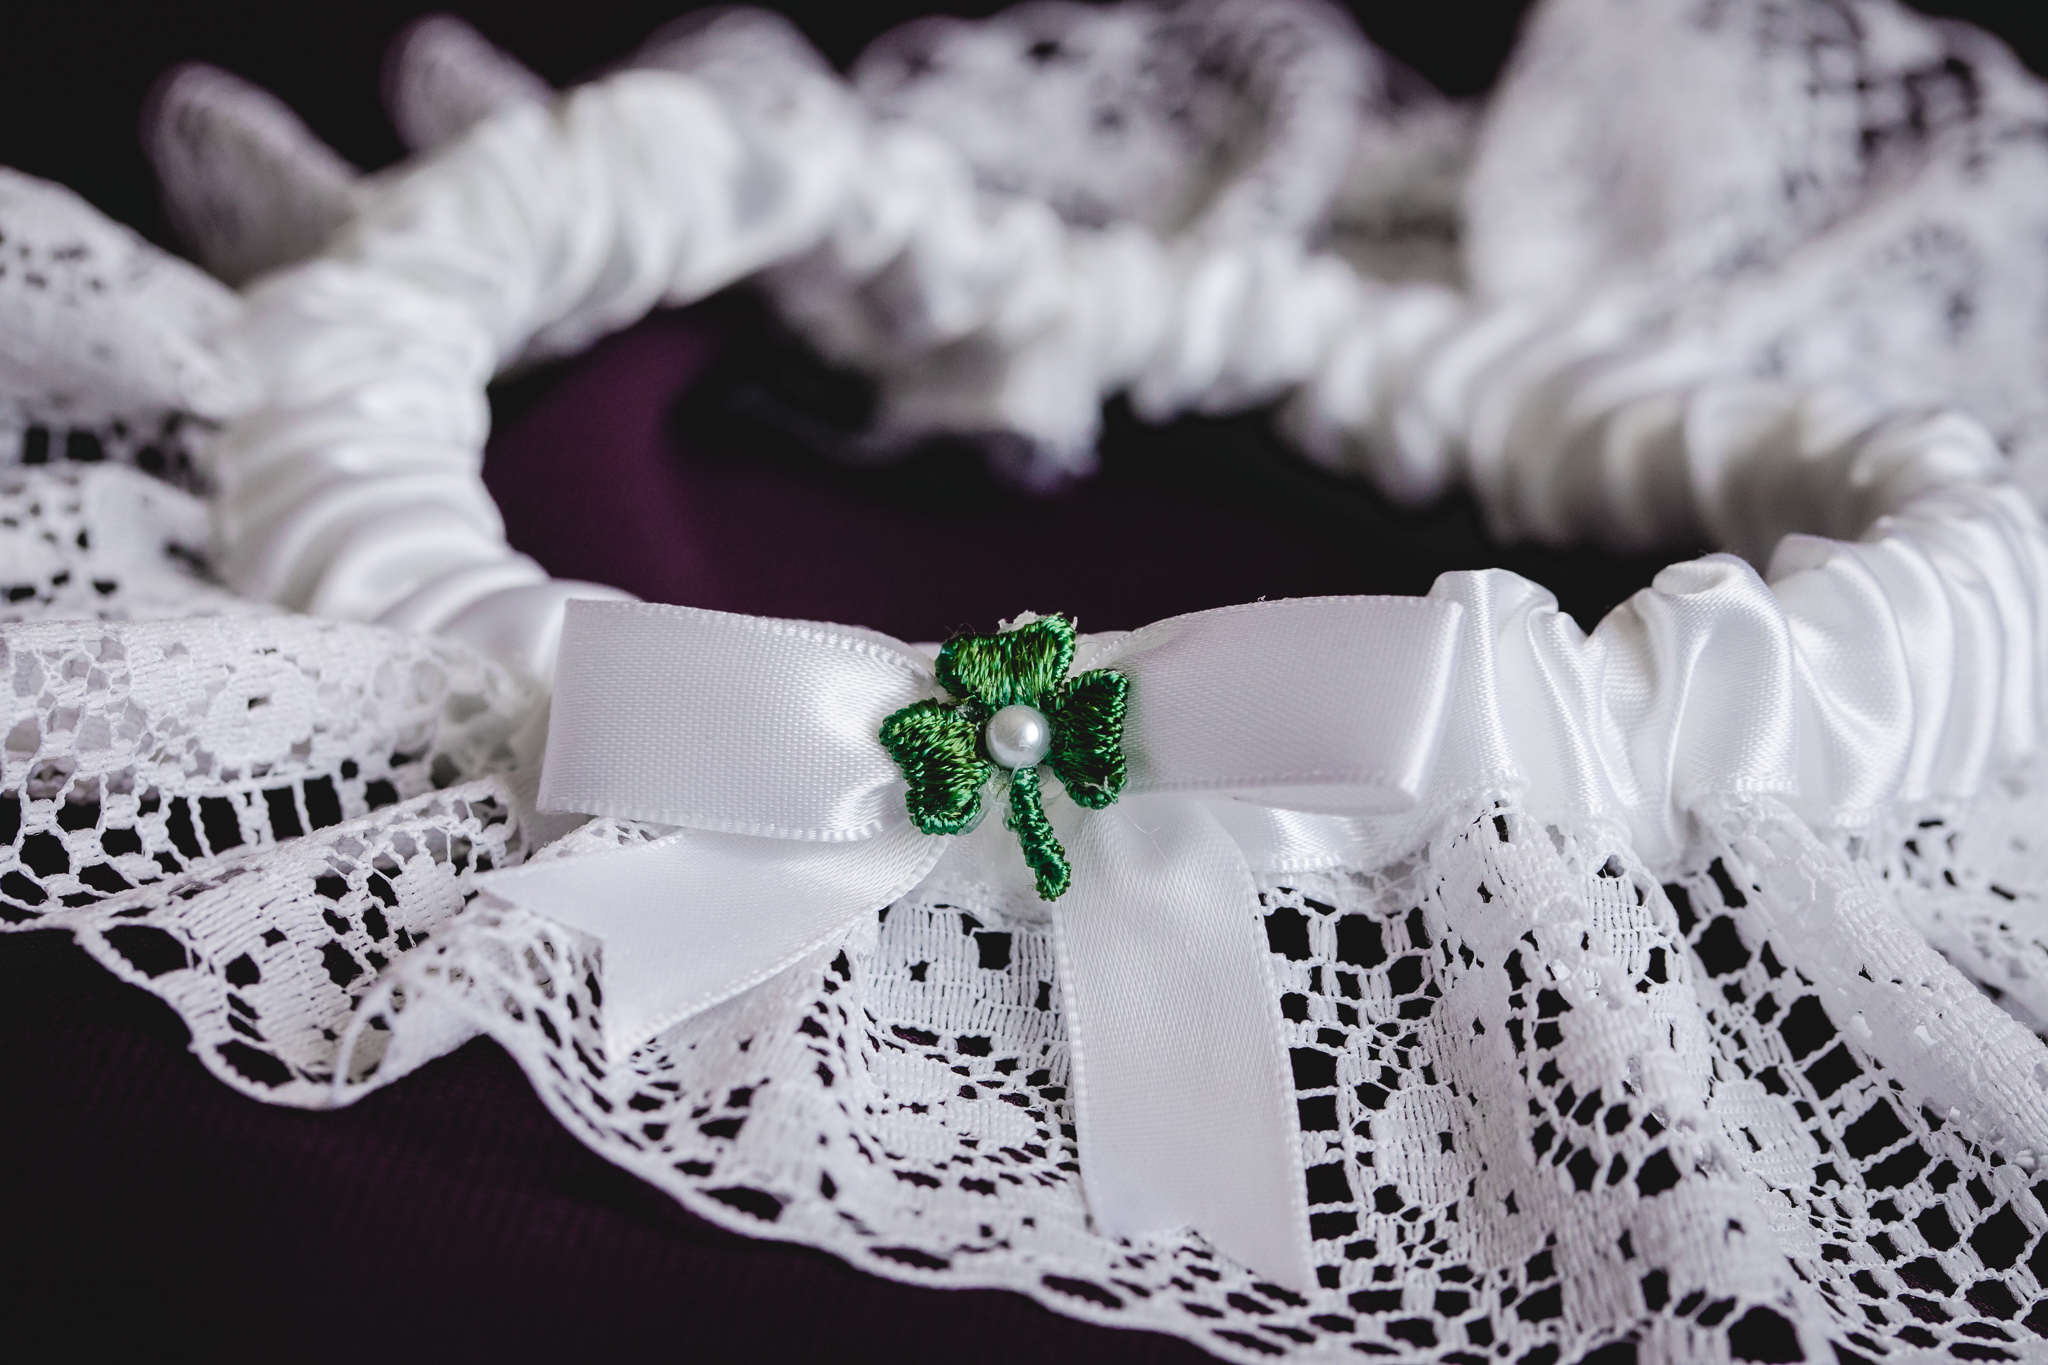 Bride's white garter with green shamrock